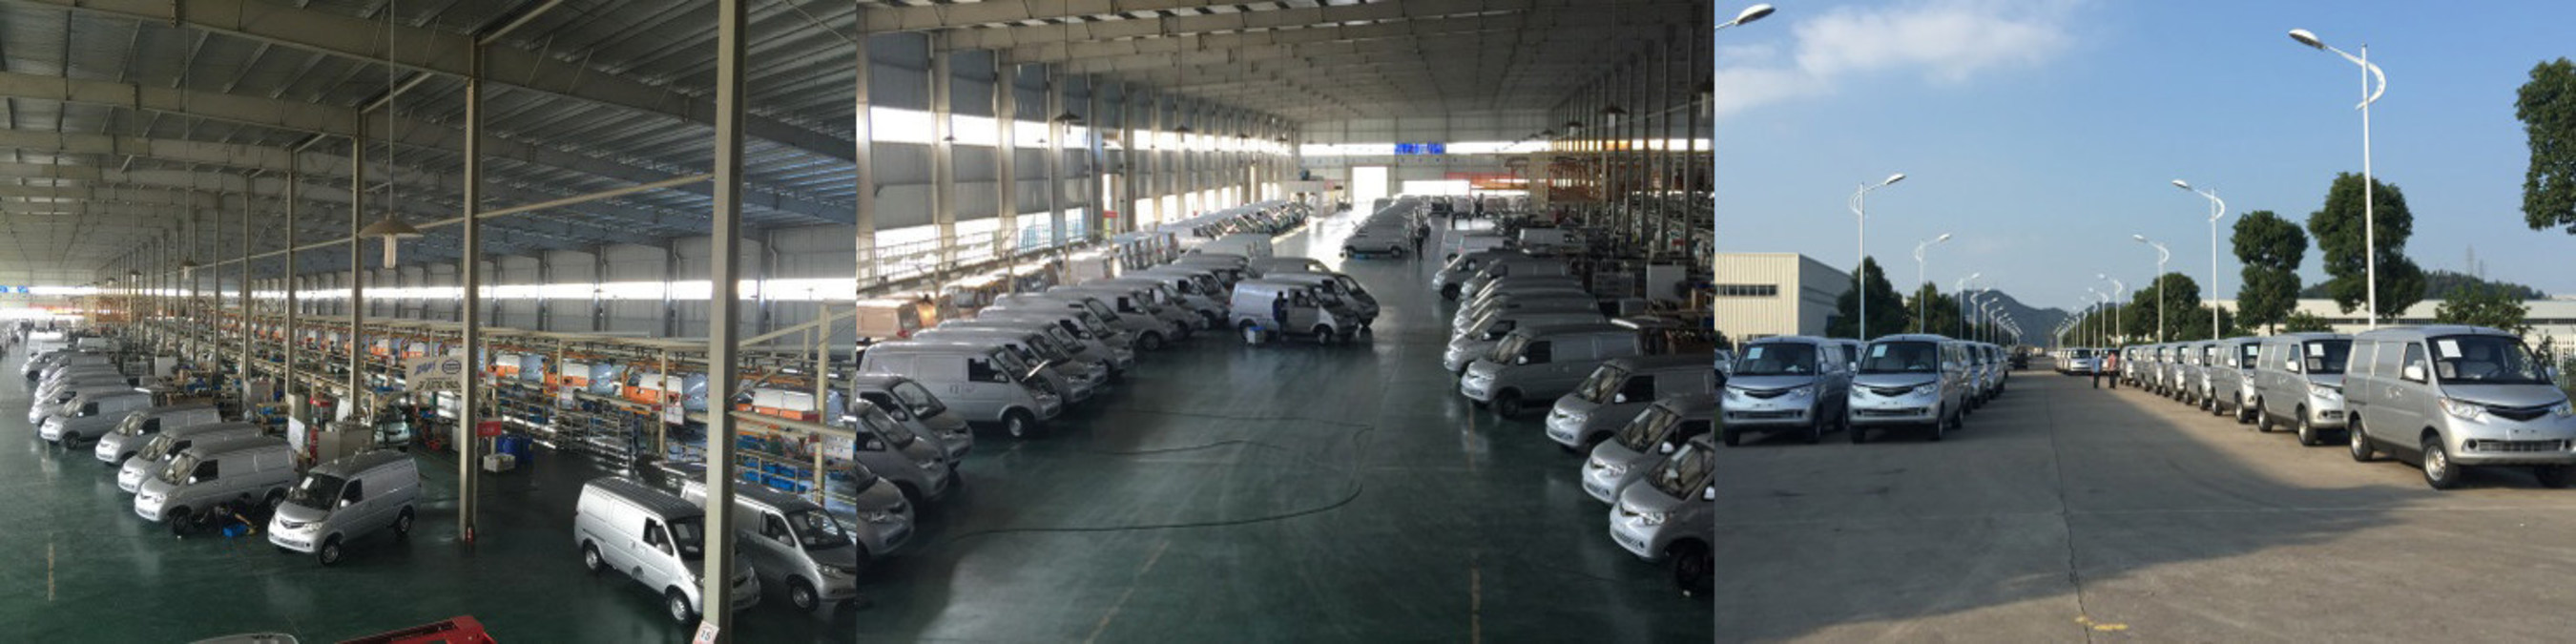 ZAP and Jonway Auto Ramps Daily Production of EV Minivan